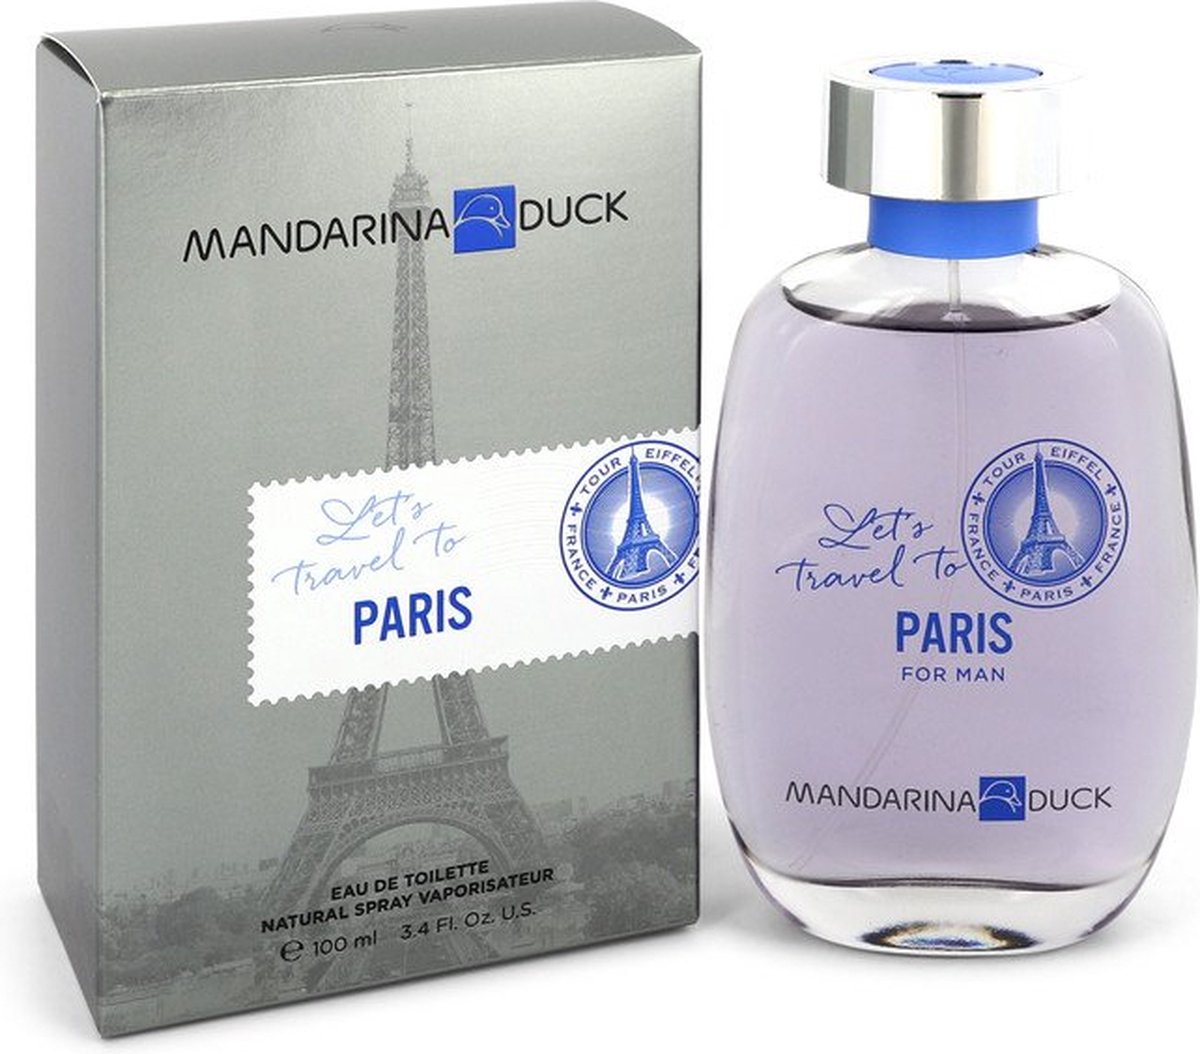 Mandarina Duck Mandarina Duck Let's Travel To Paris eau de toilette spray 100 ml